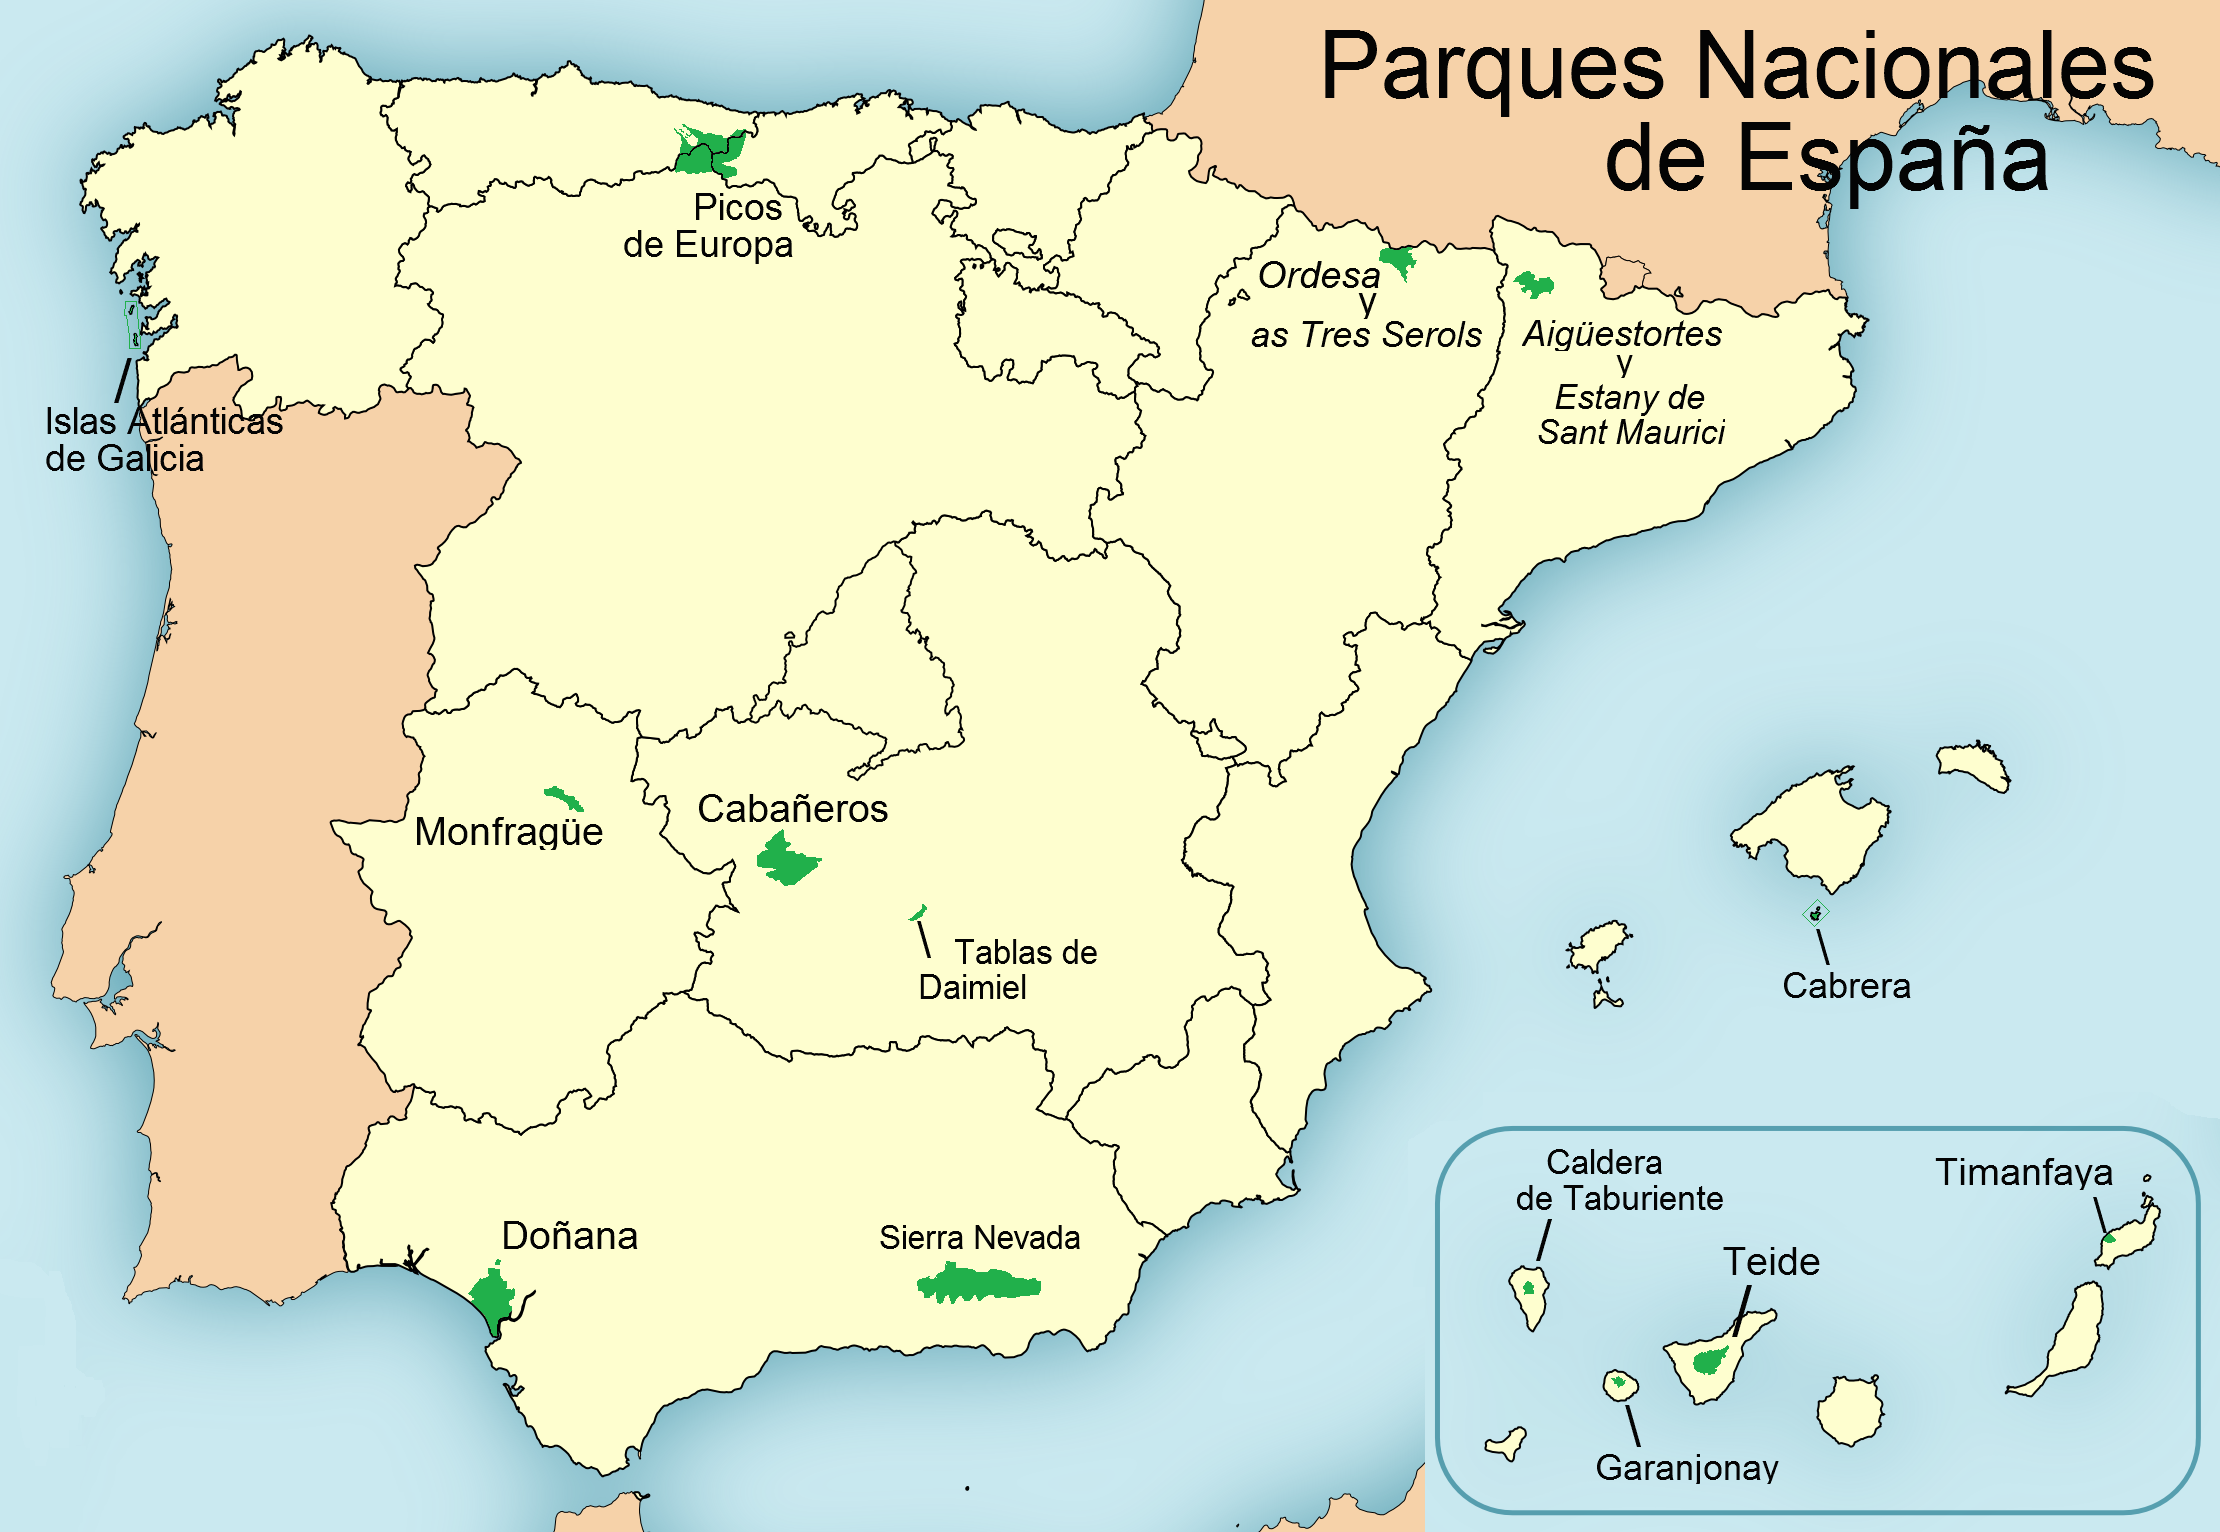 File:Parques Nacionales de España.png - Wikimedia Commons